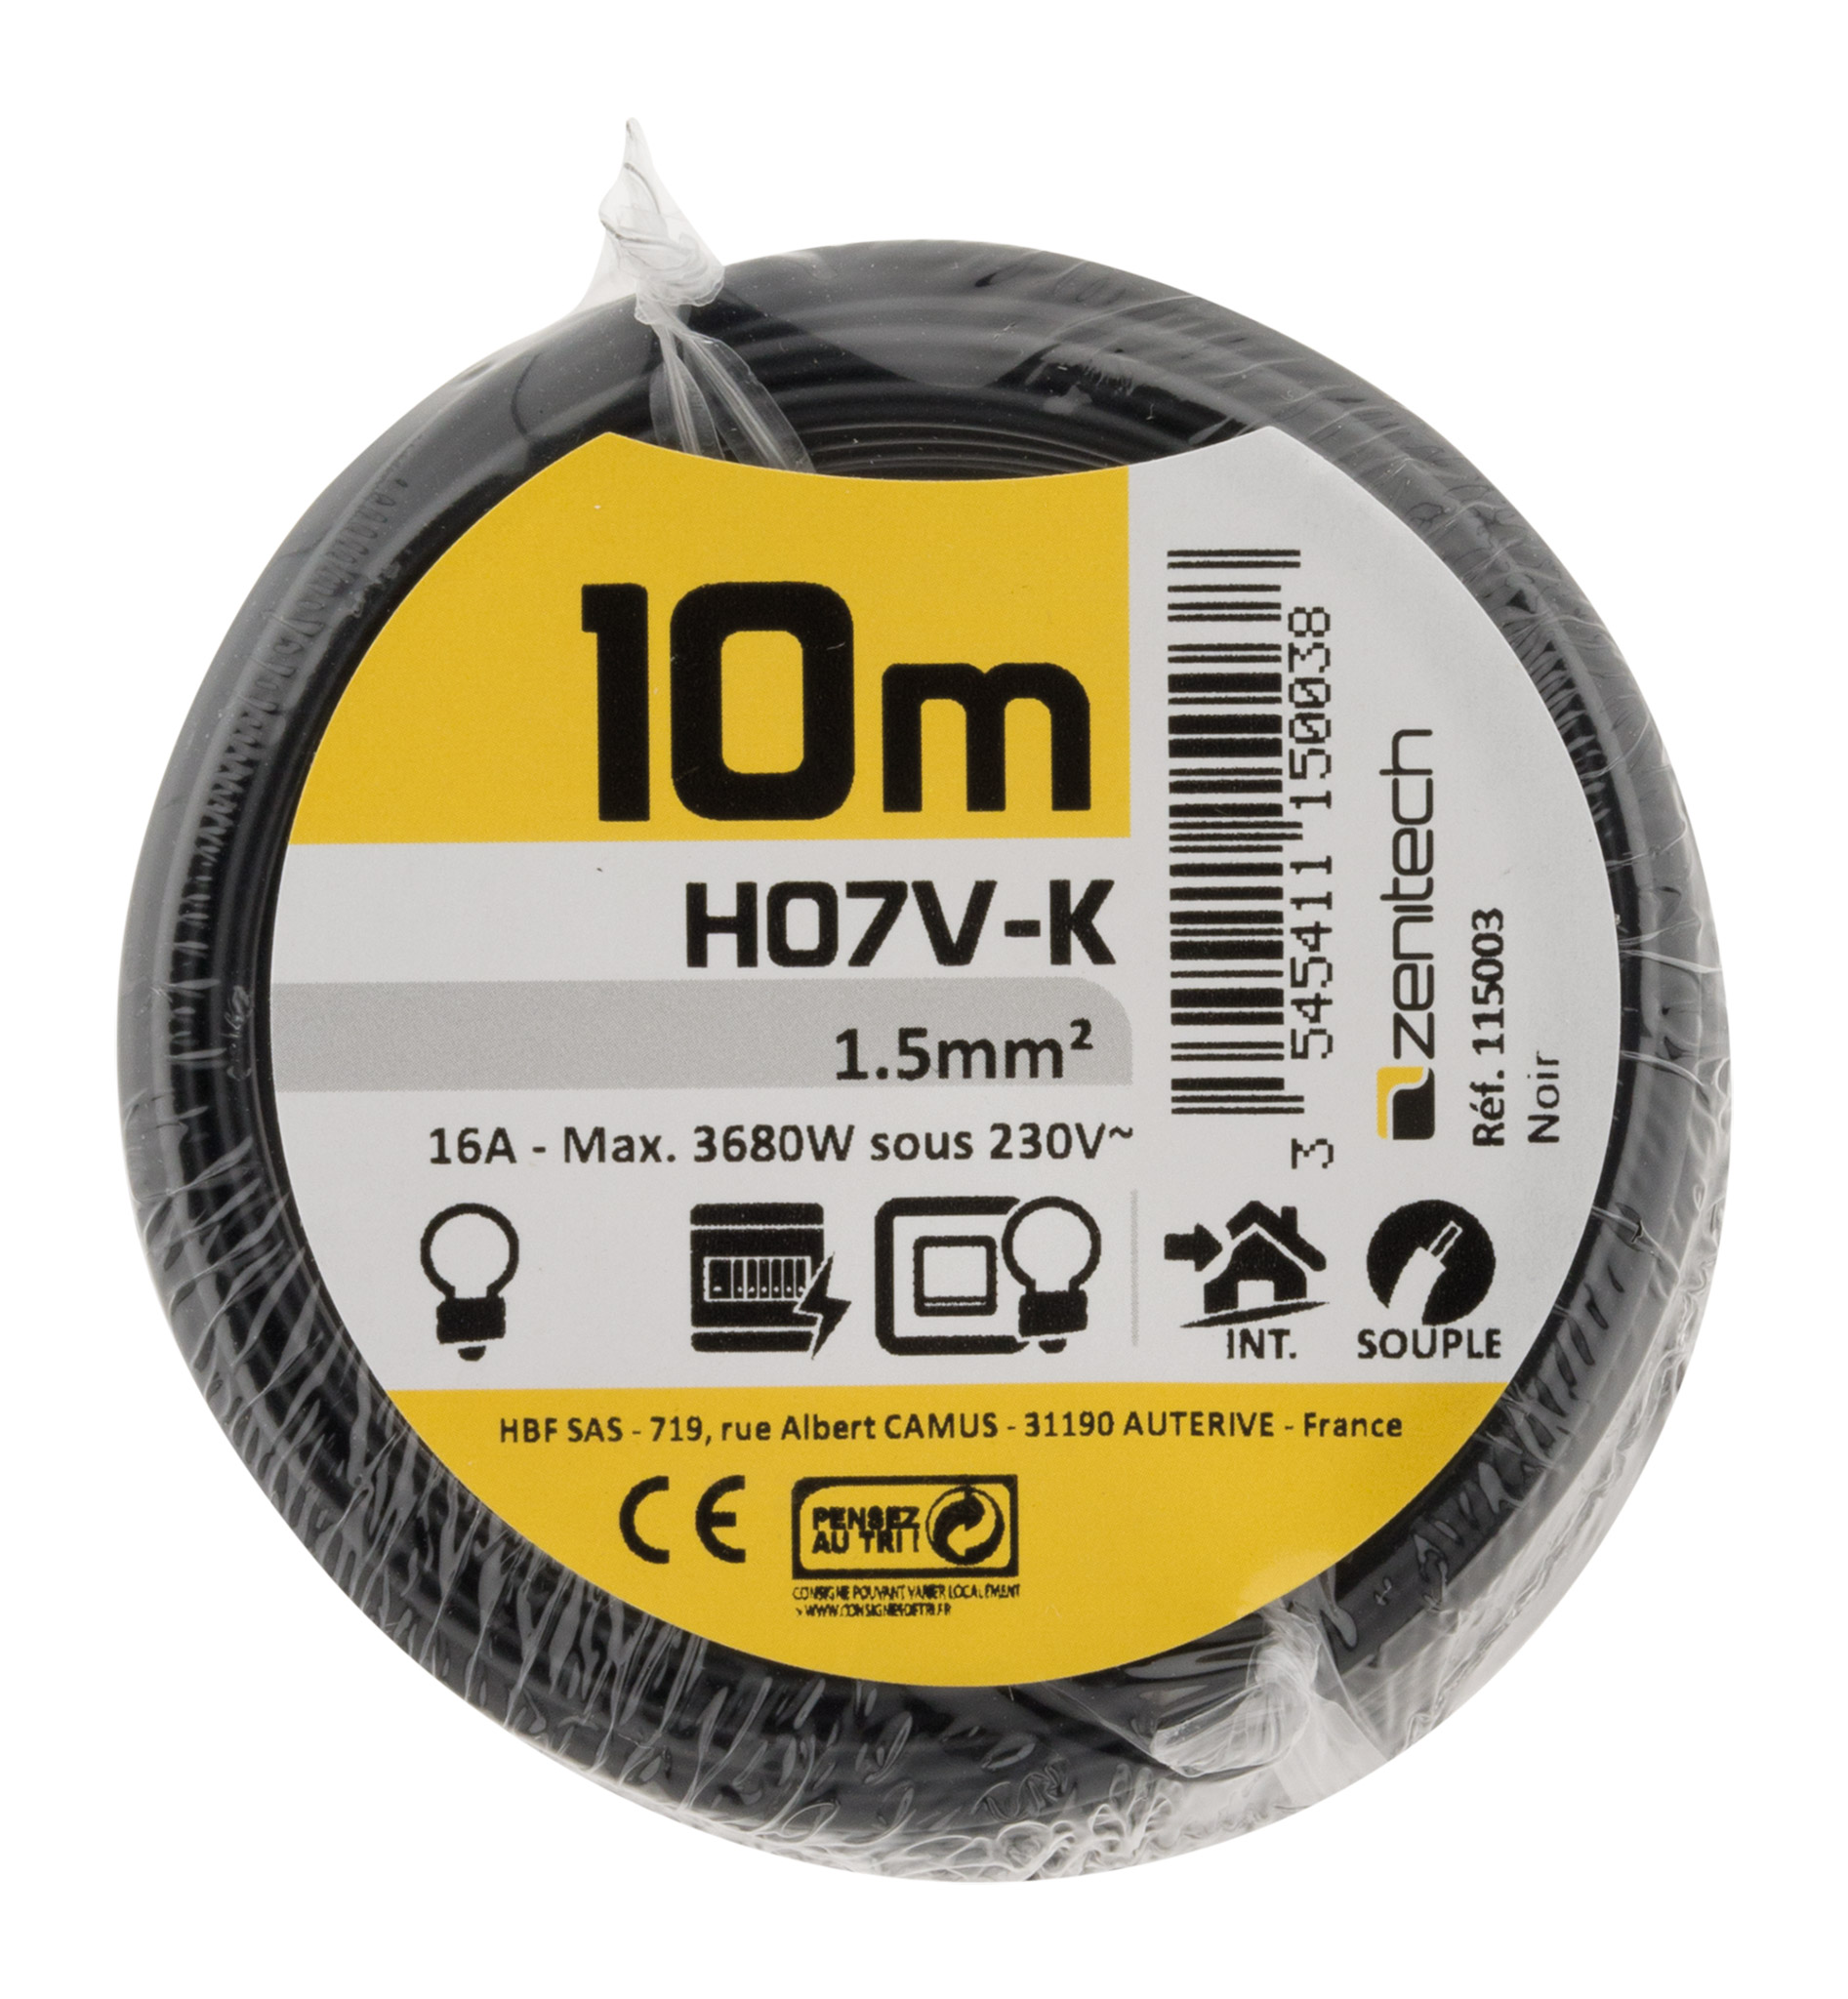 Cable ho7vk 1.5 noir 10m - plasto - INOTECH